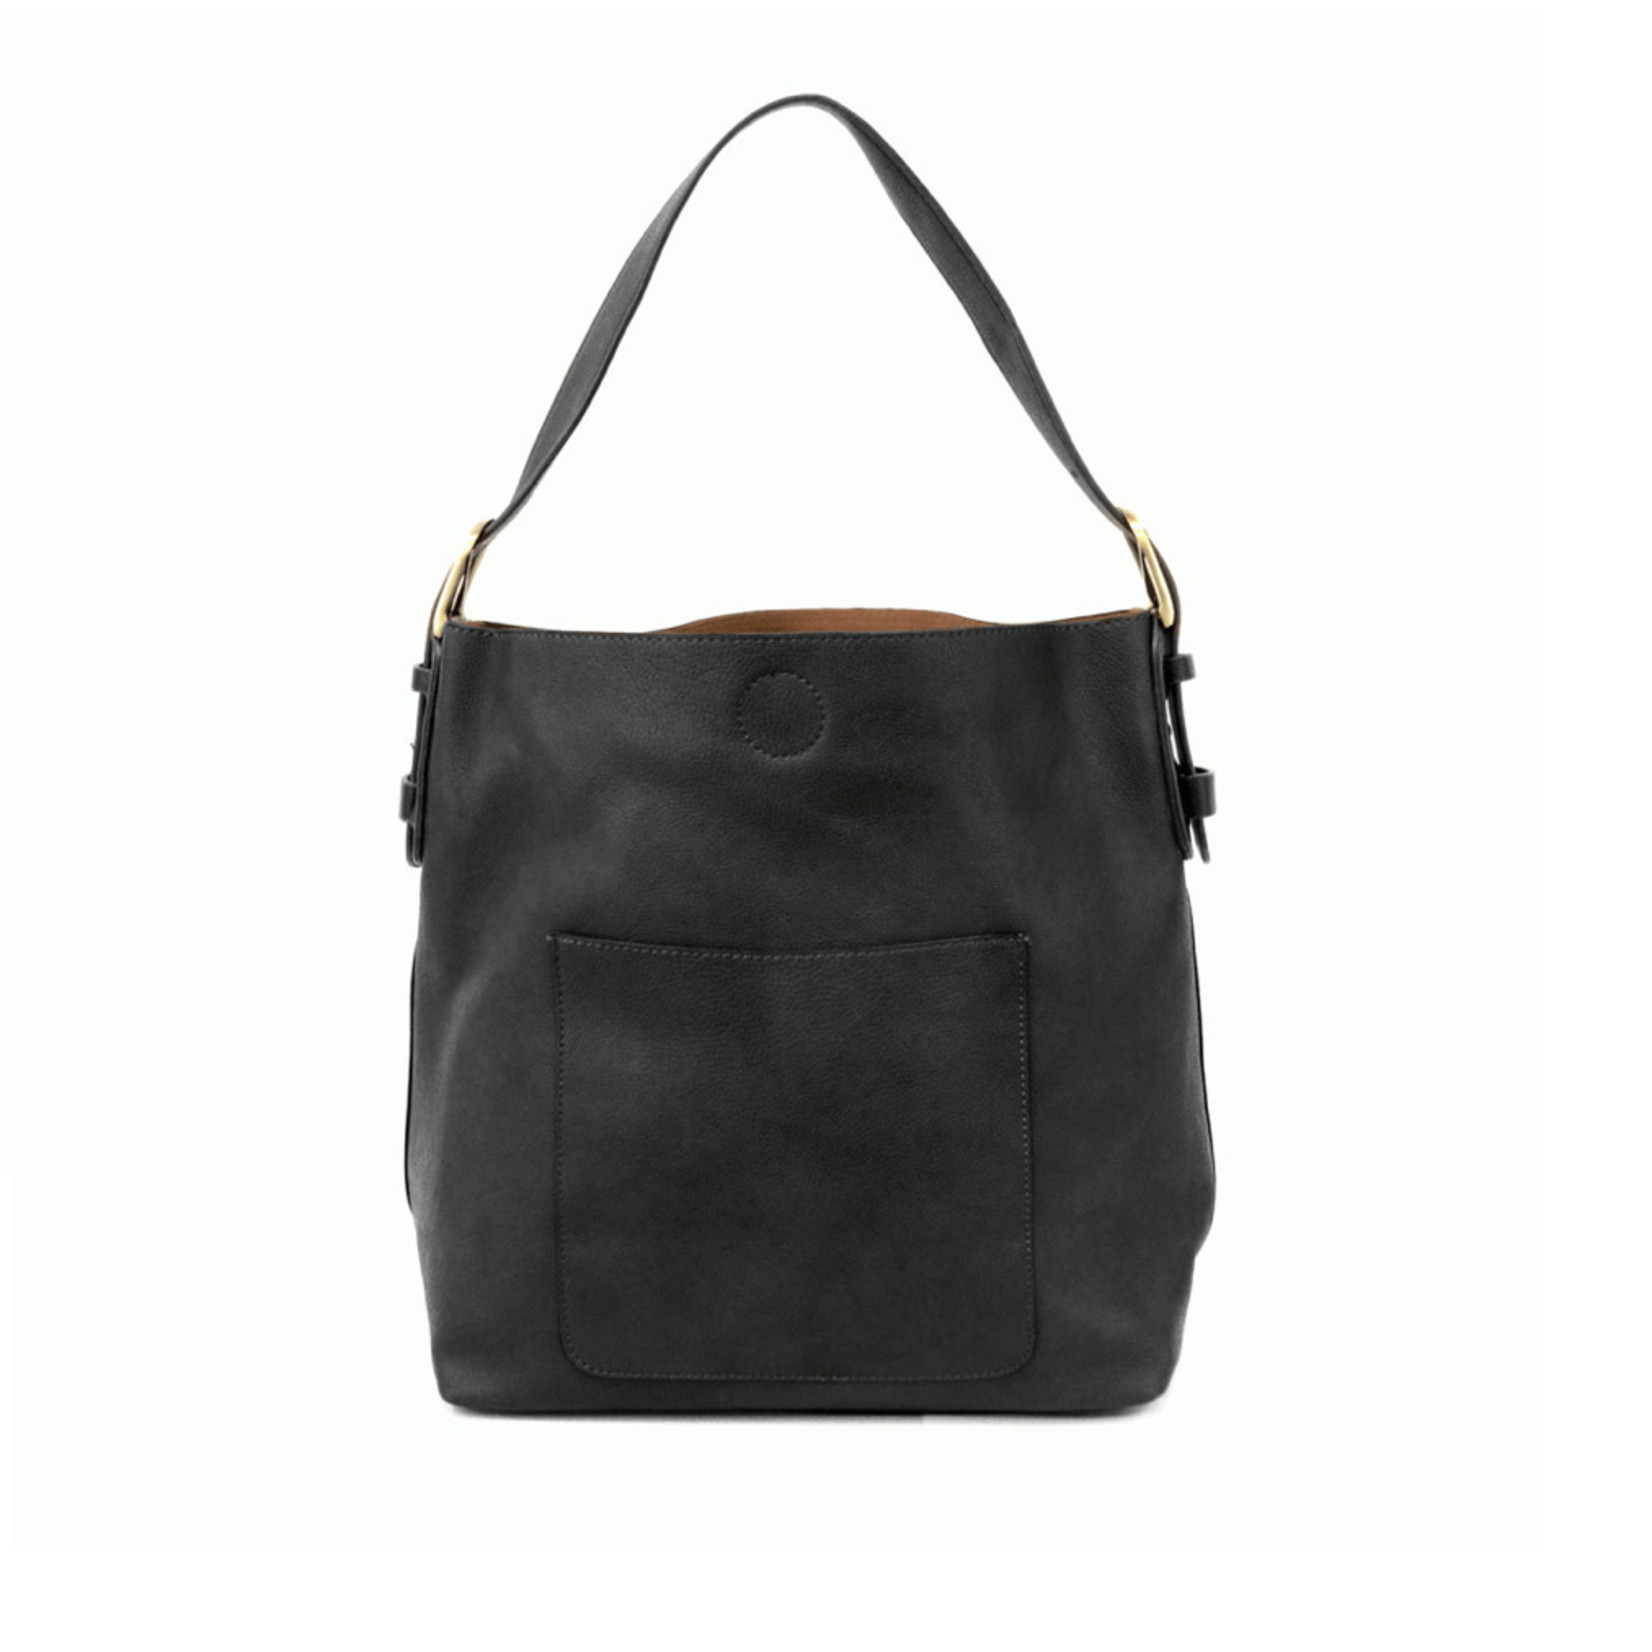 Joy Susan Hobo Black Handle Handbag